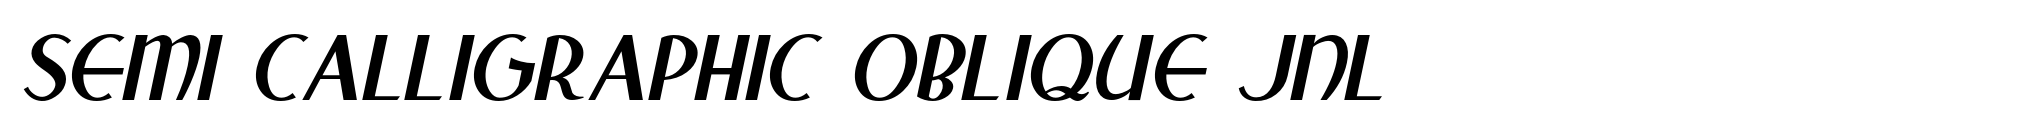 Semi Calligraphic Oblique JNL image